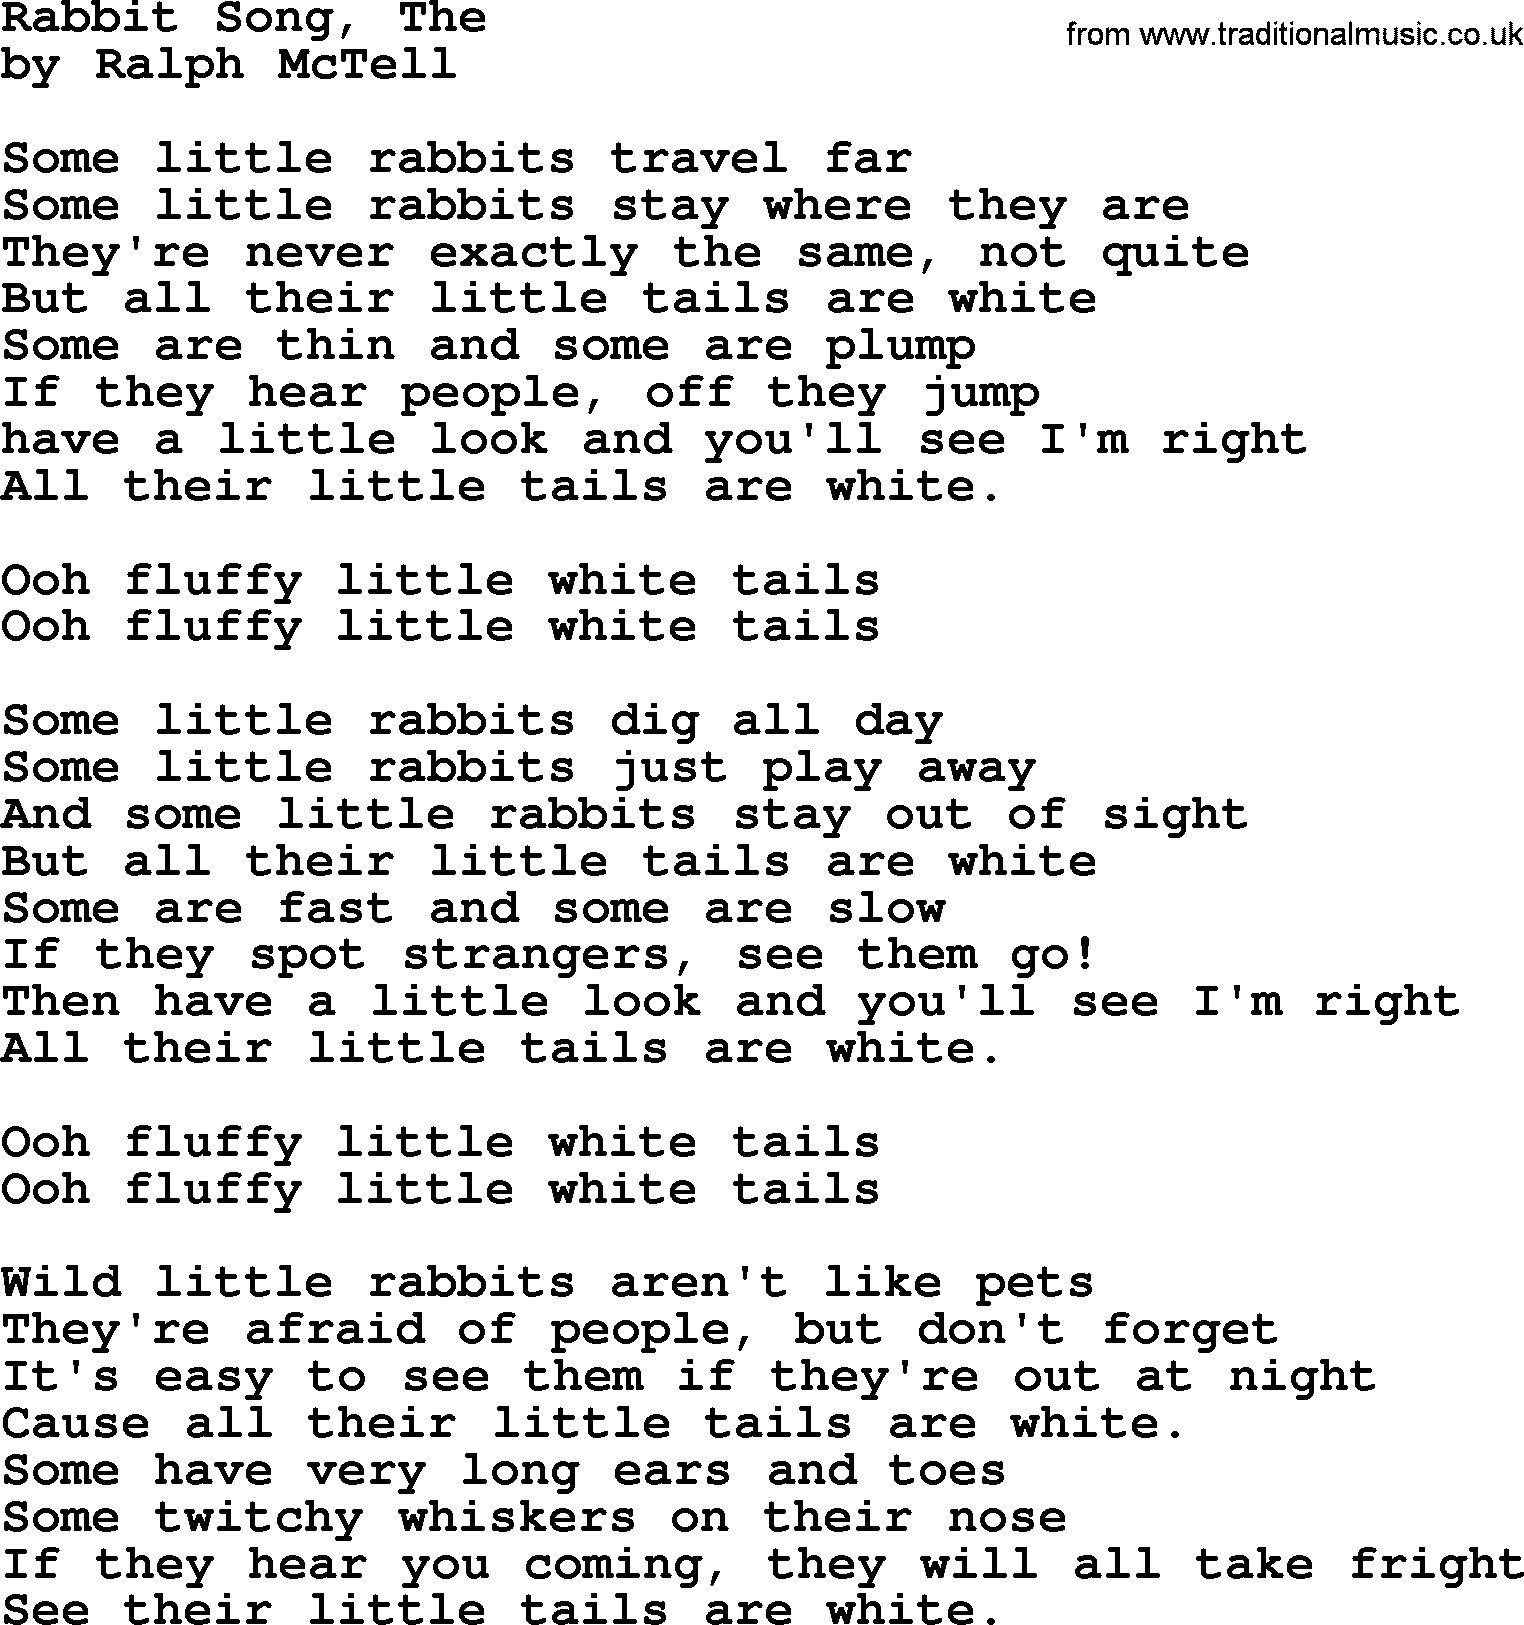 Ralph McTell Song: Rabbit Song, The, lyrics